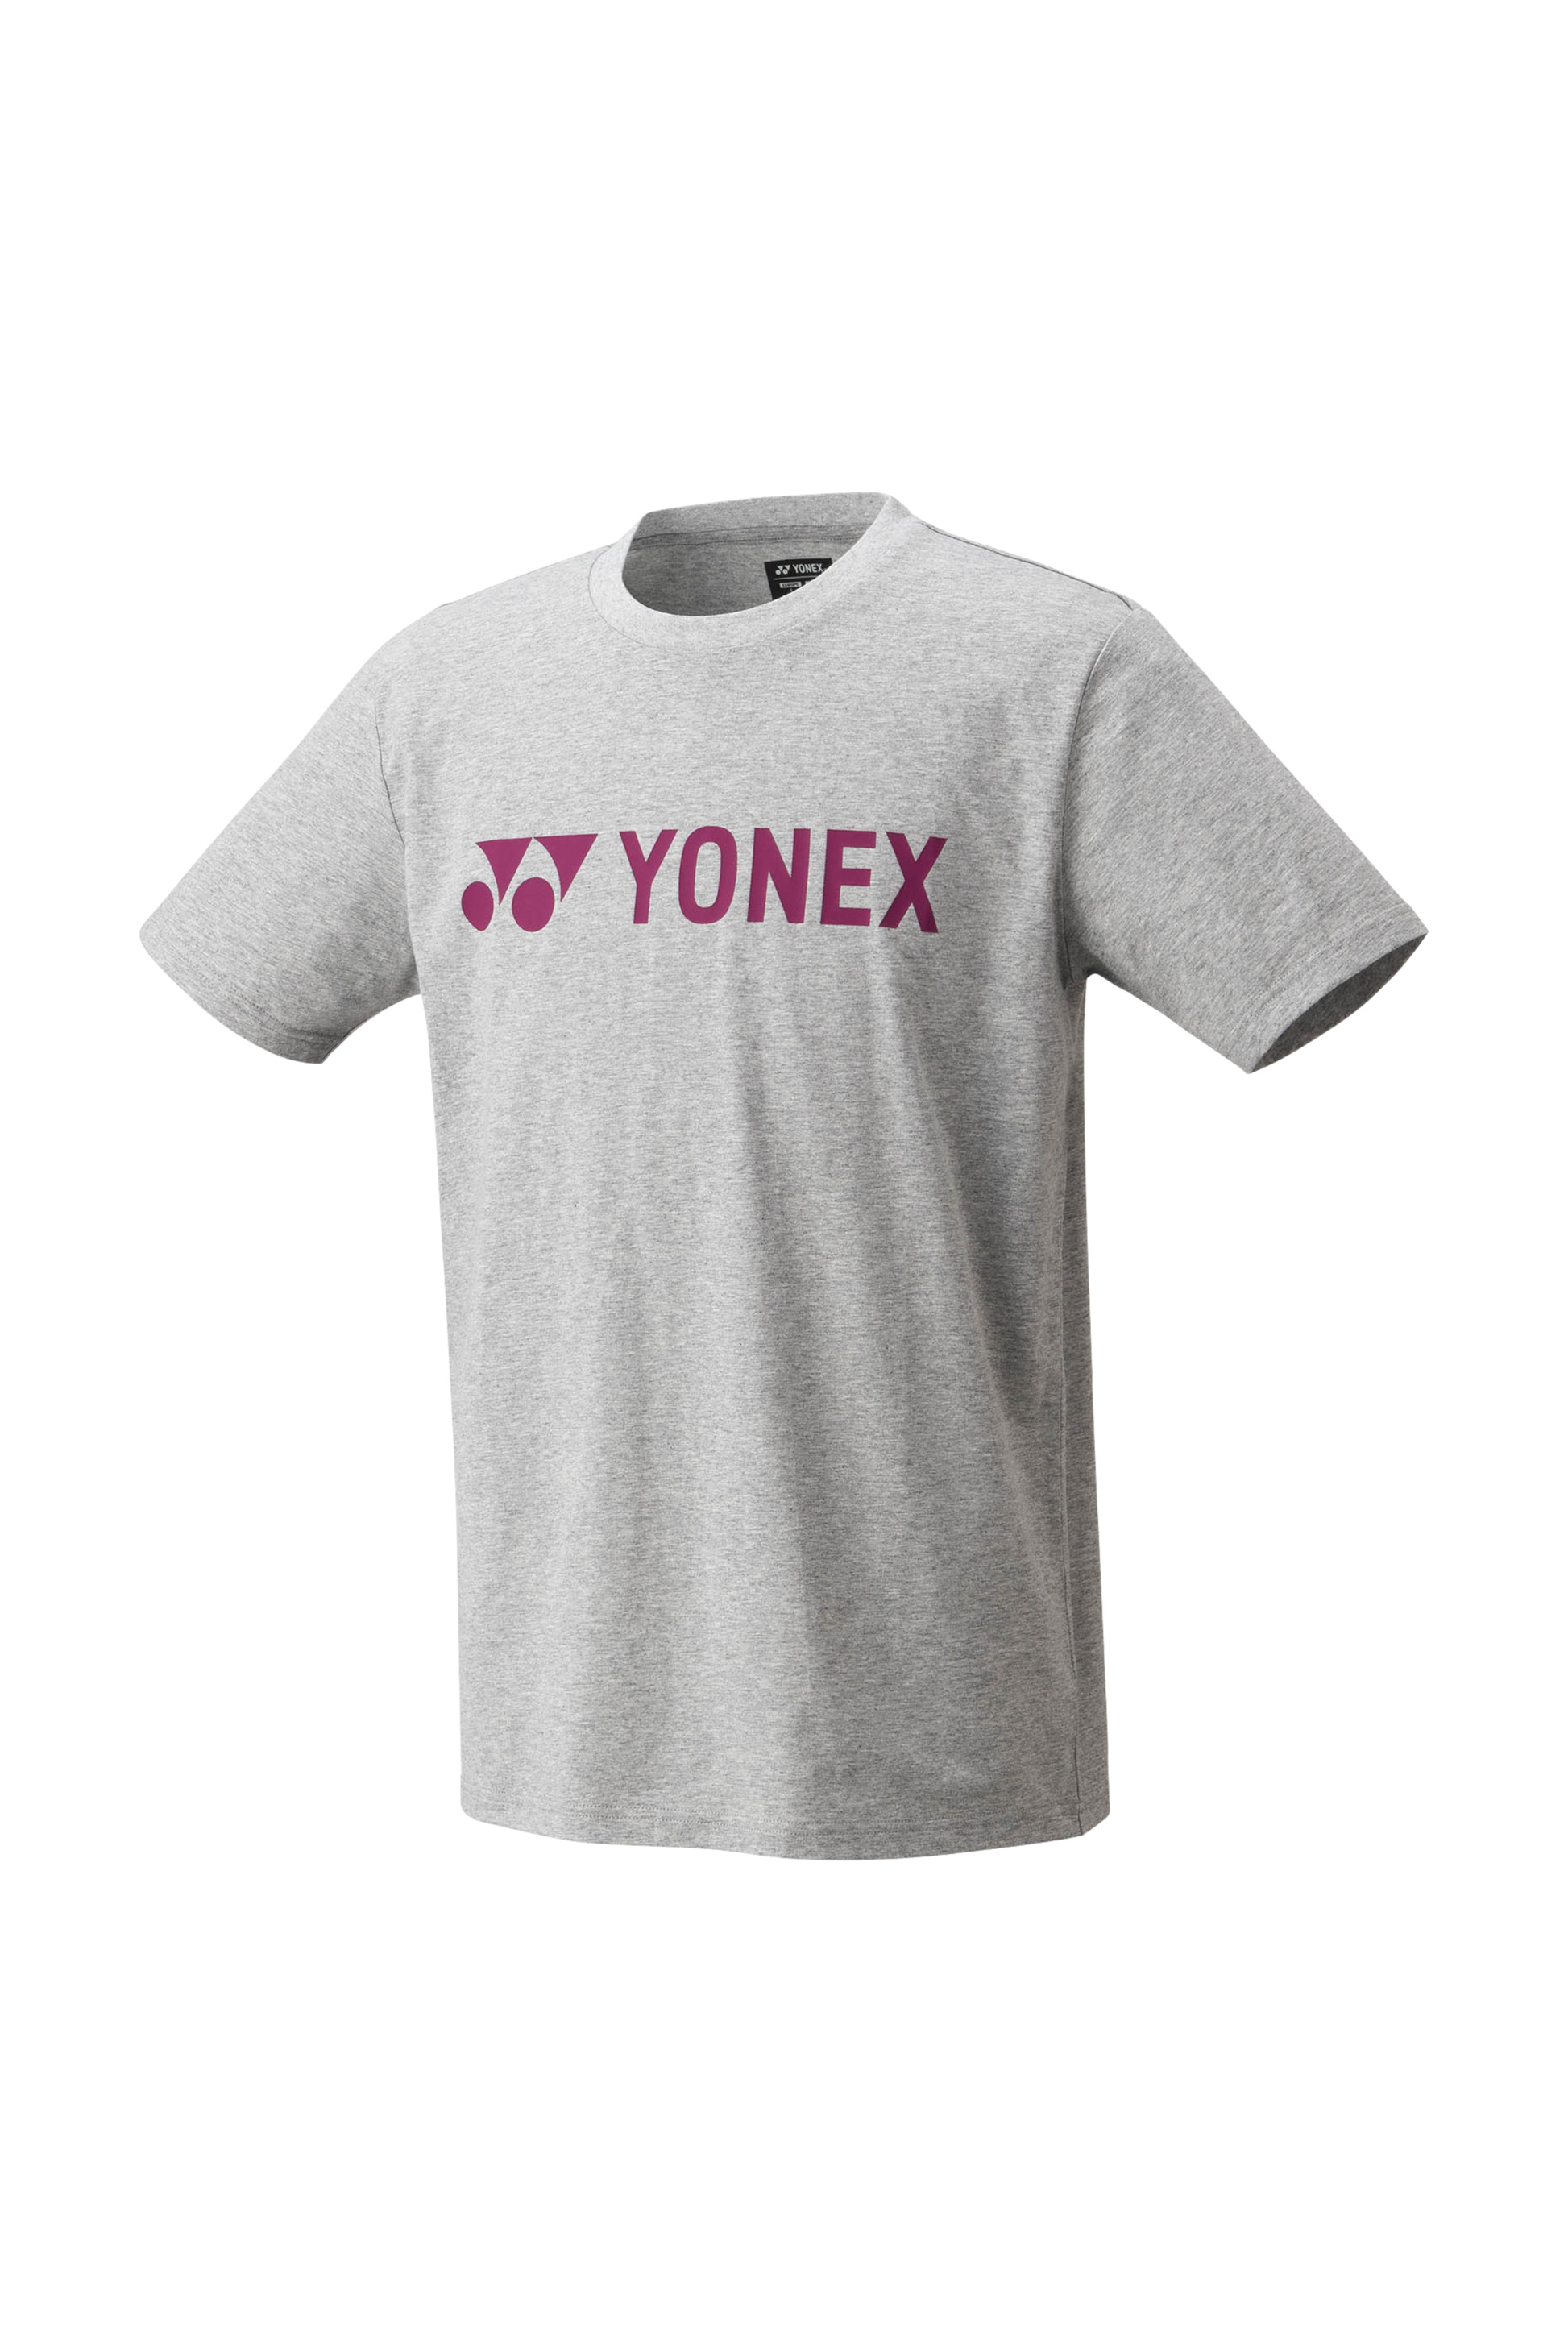 YONEX Unisex T-Shirts 16680 - Max Sports